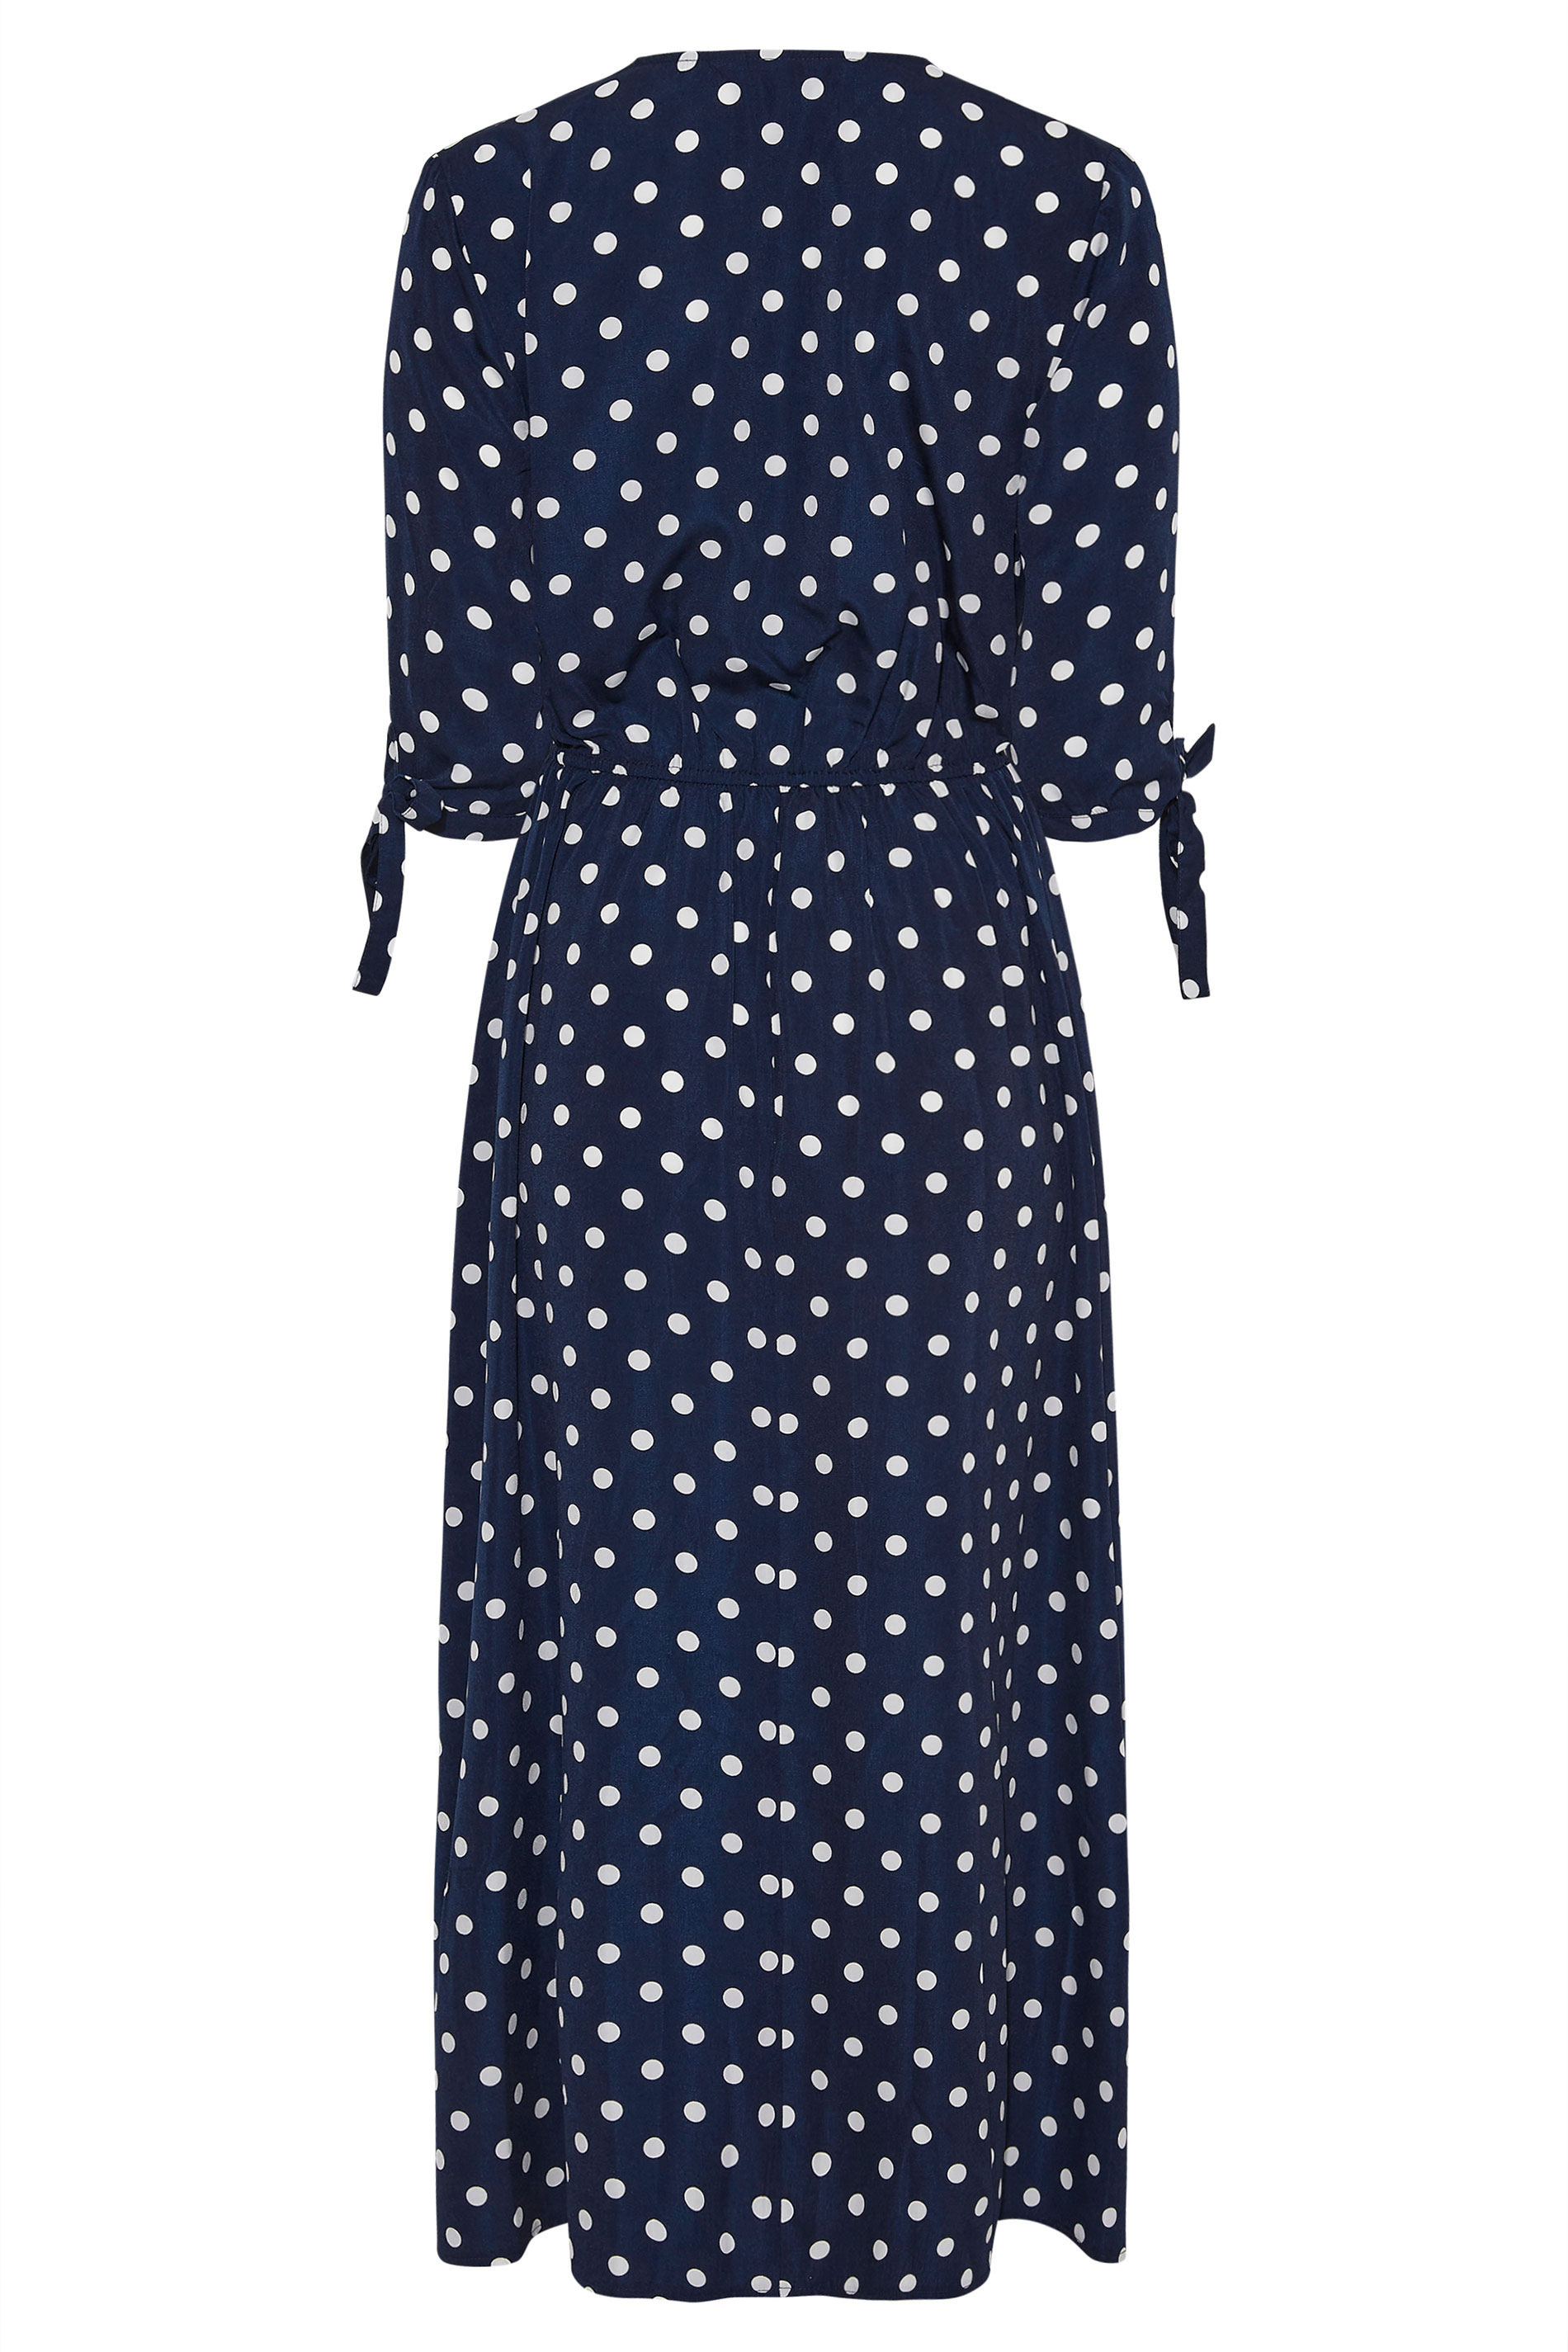 LTS Tall Women's Navy Blue Spot Tie Sleeve Midi Dress | Long Tall Sally